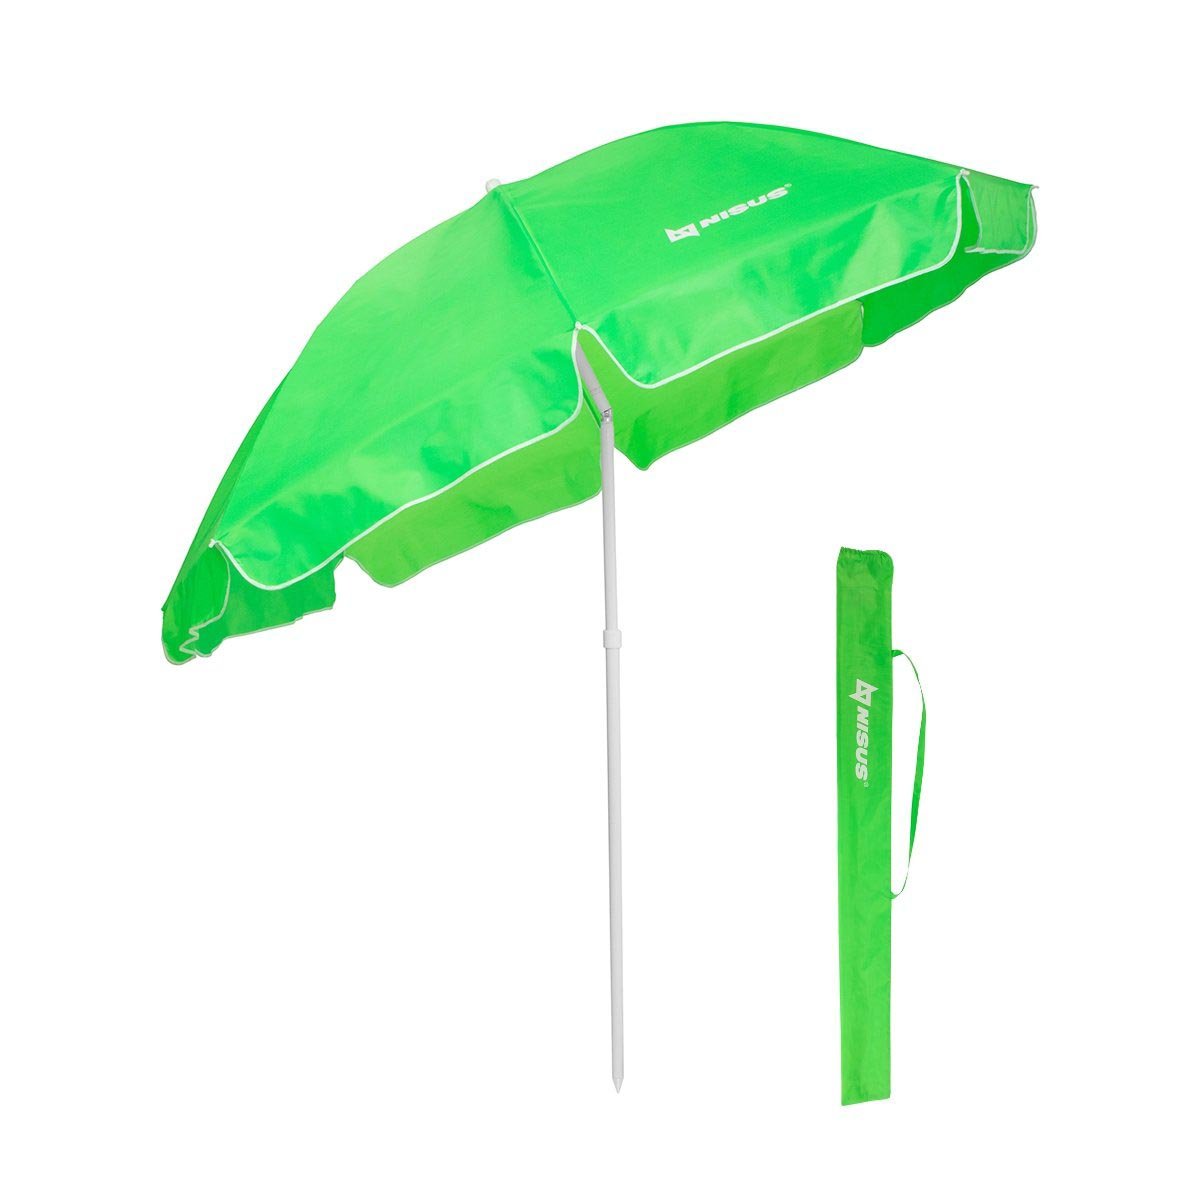 5, 6 ft Green Folding Tilting Beach Umbrella with Carry Bag